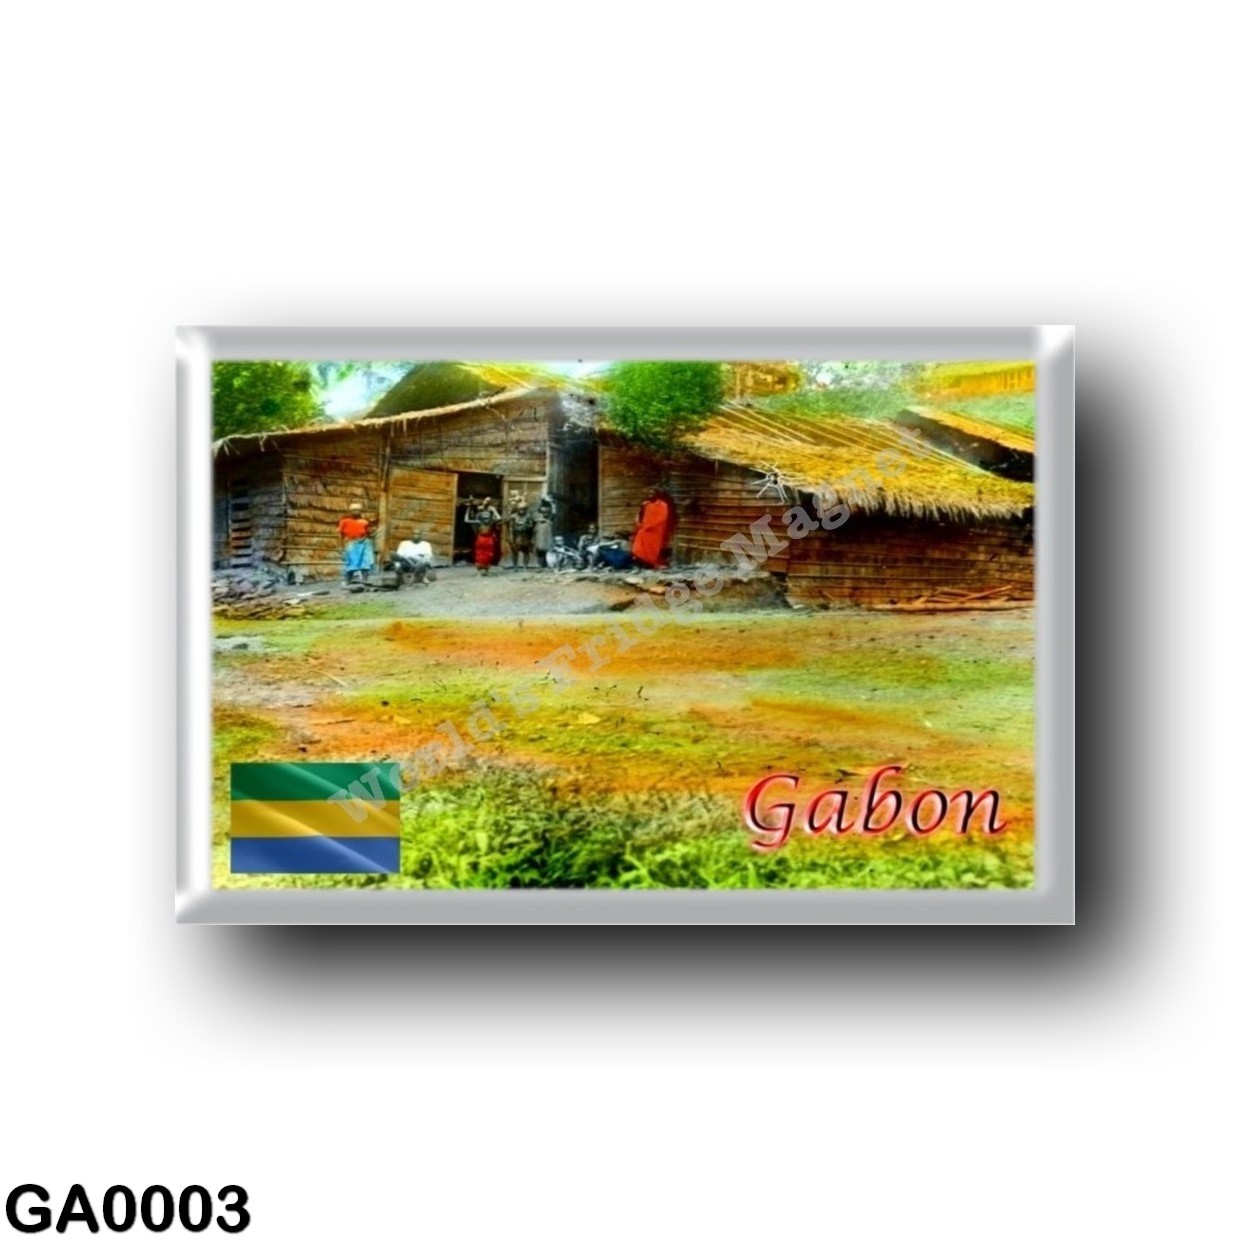 2630469 GA0003 Africa Gabon Collectie Tropenmuseum